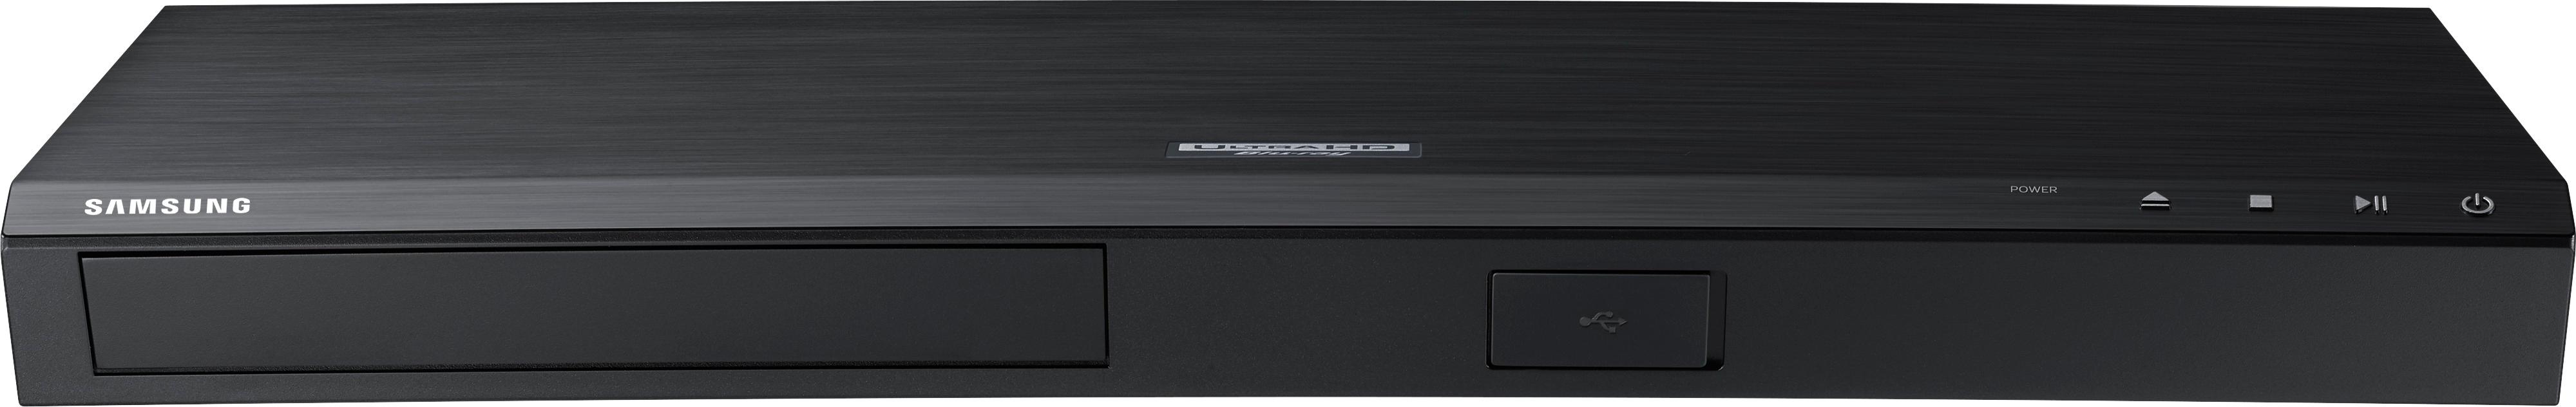 Samsung - Streaming 4K Ultra HD Audio Wi-Fi Built-In Blu-ray Player - Black